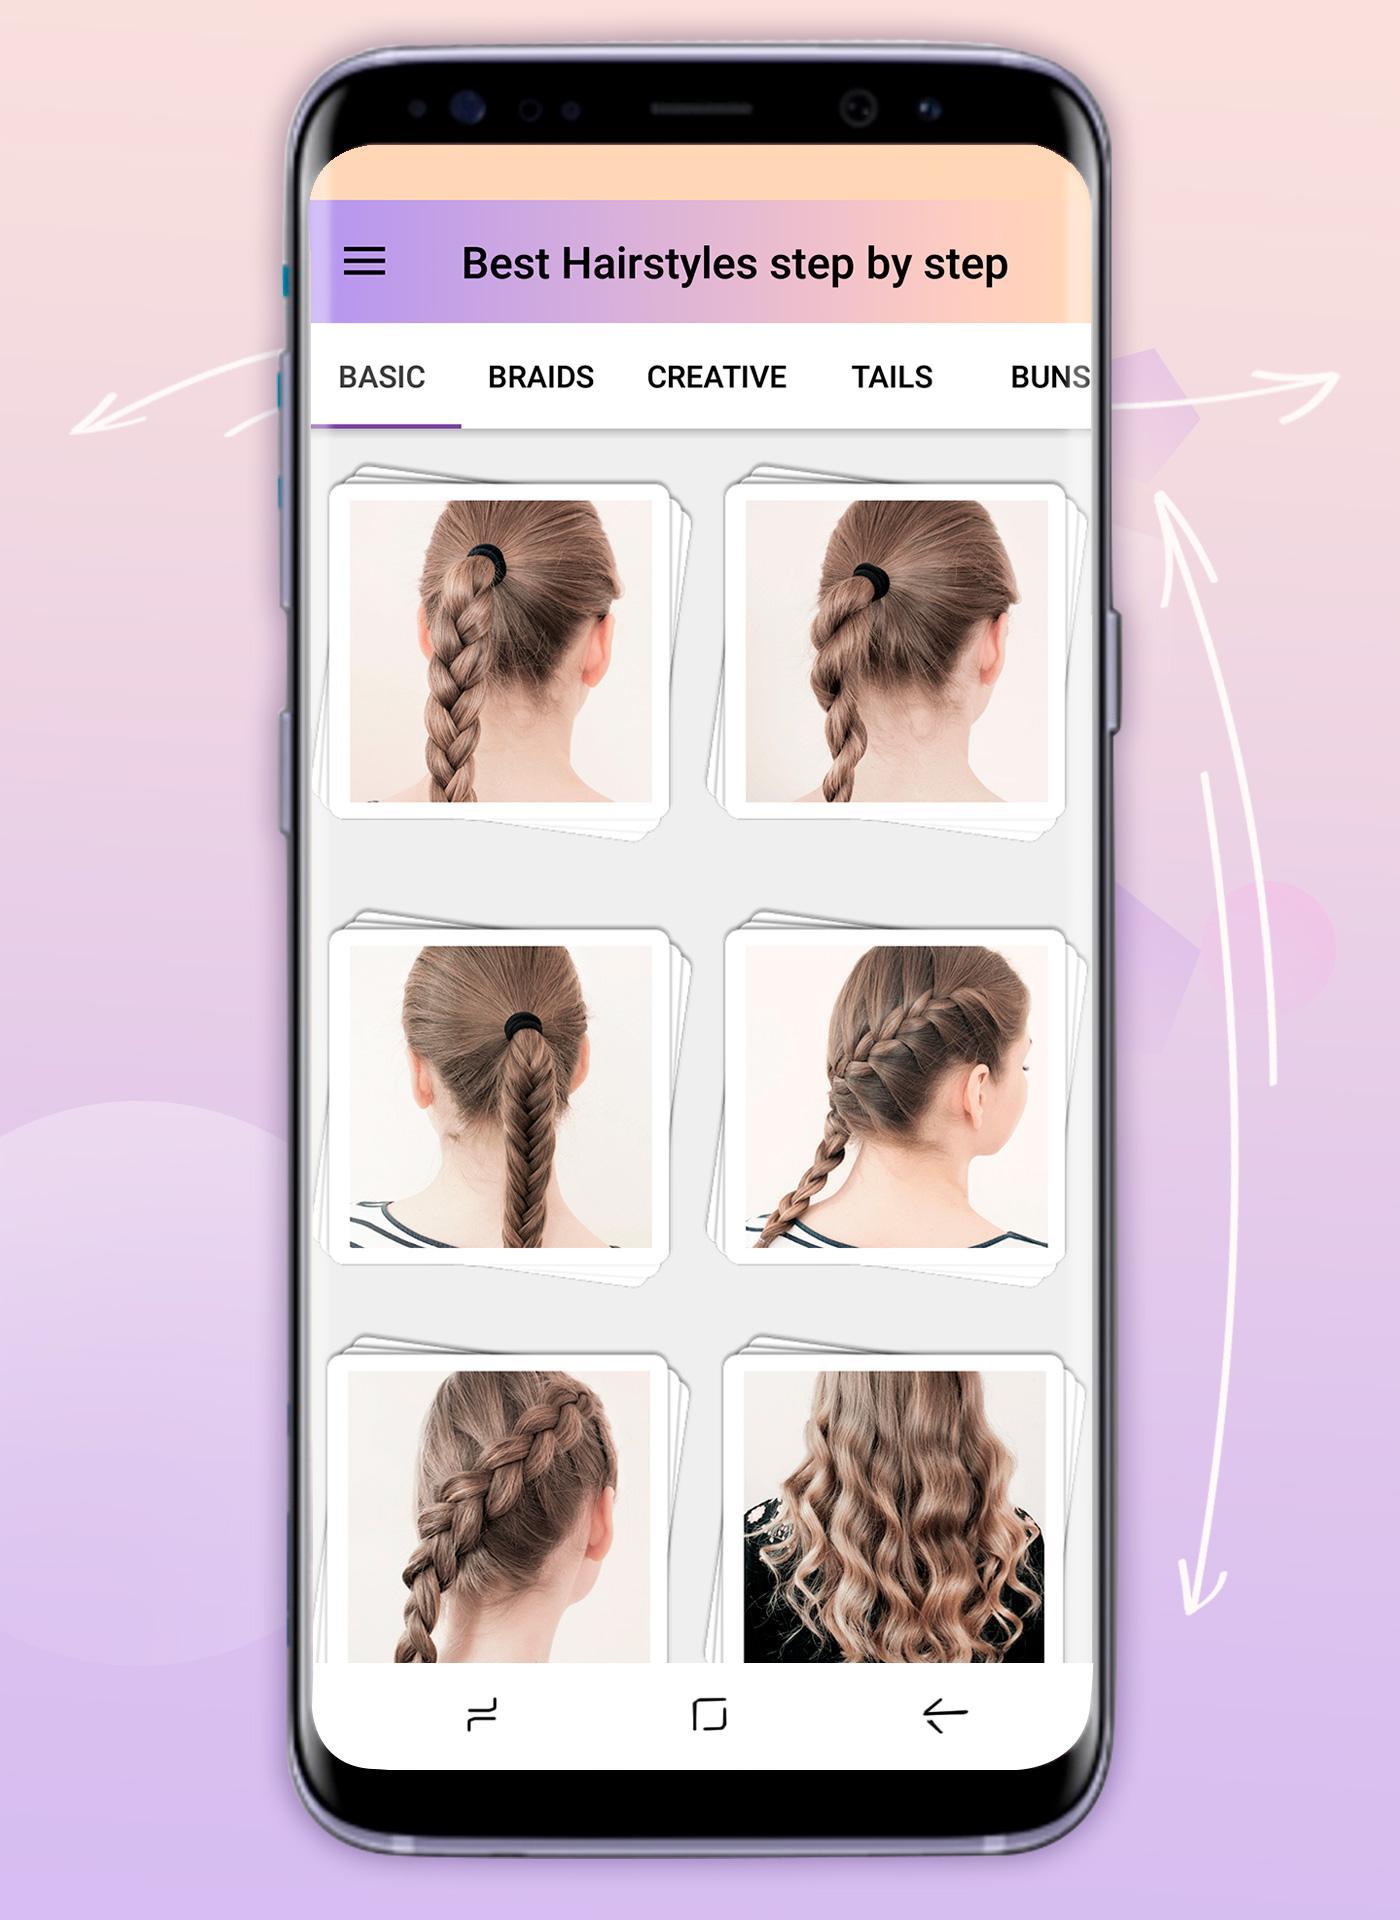 Hairstyles step by step 1.24.0.0 Screenshot 2